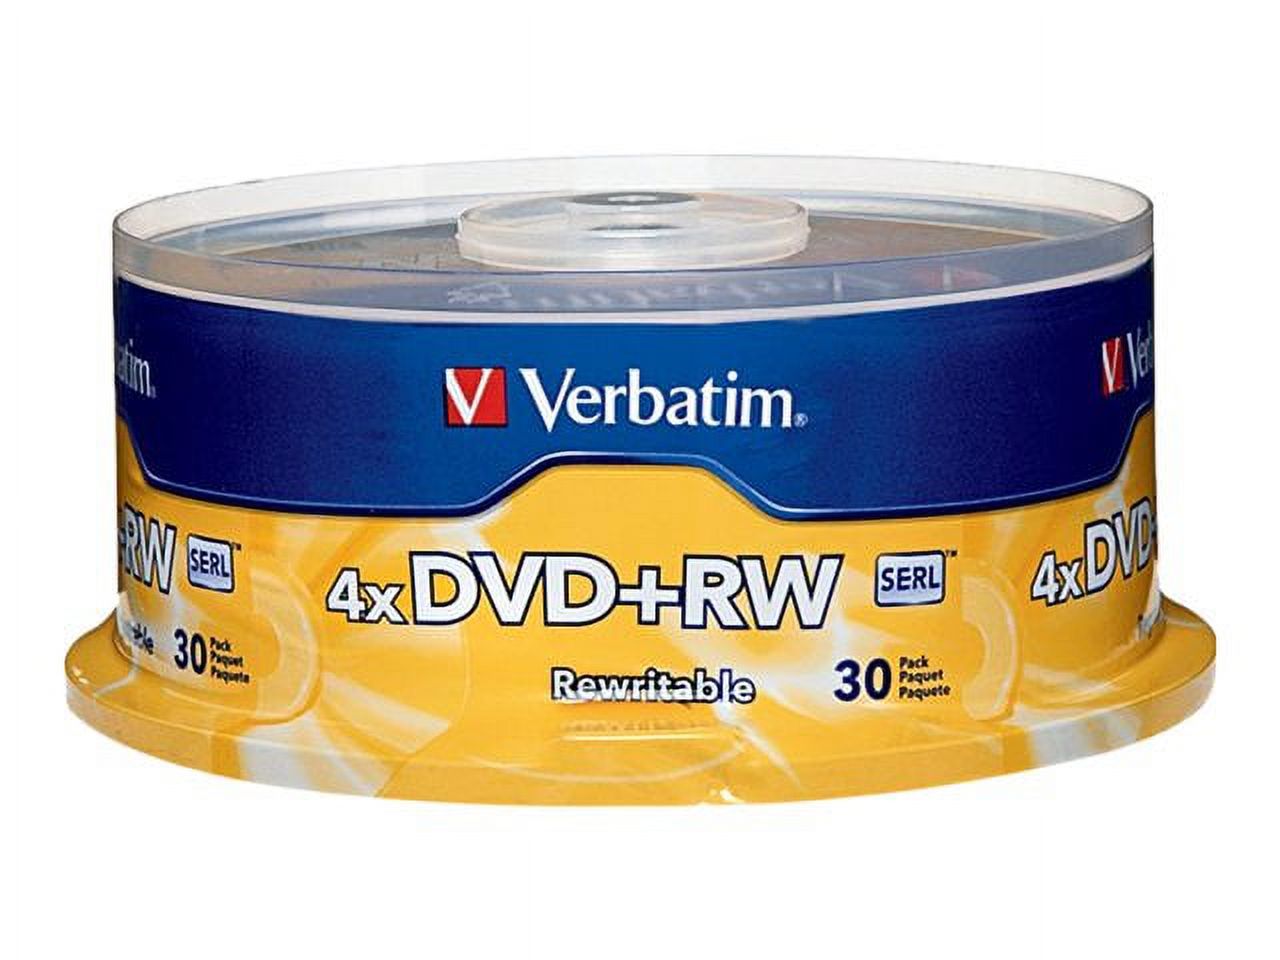 Verbatim, VER94834, 4X DVD+RW Rewritable Discs Spindle, 30, Silver - image 3 of 9